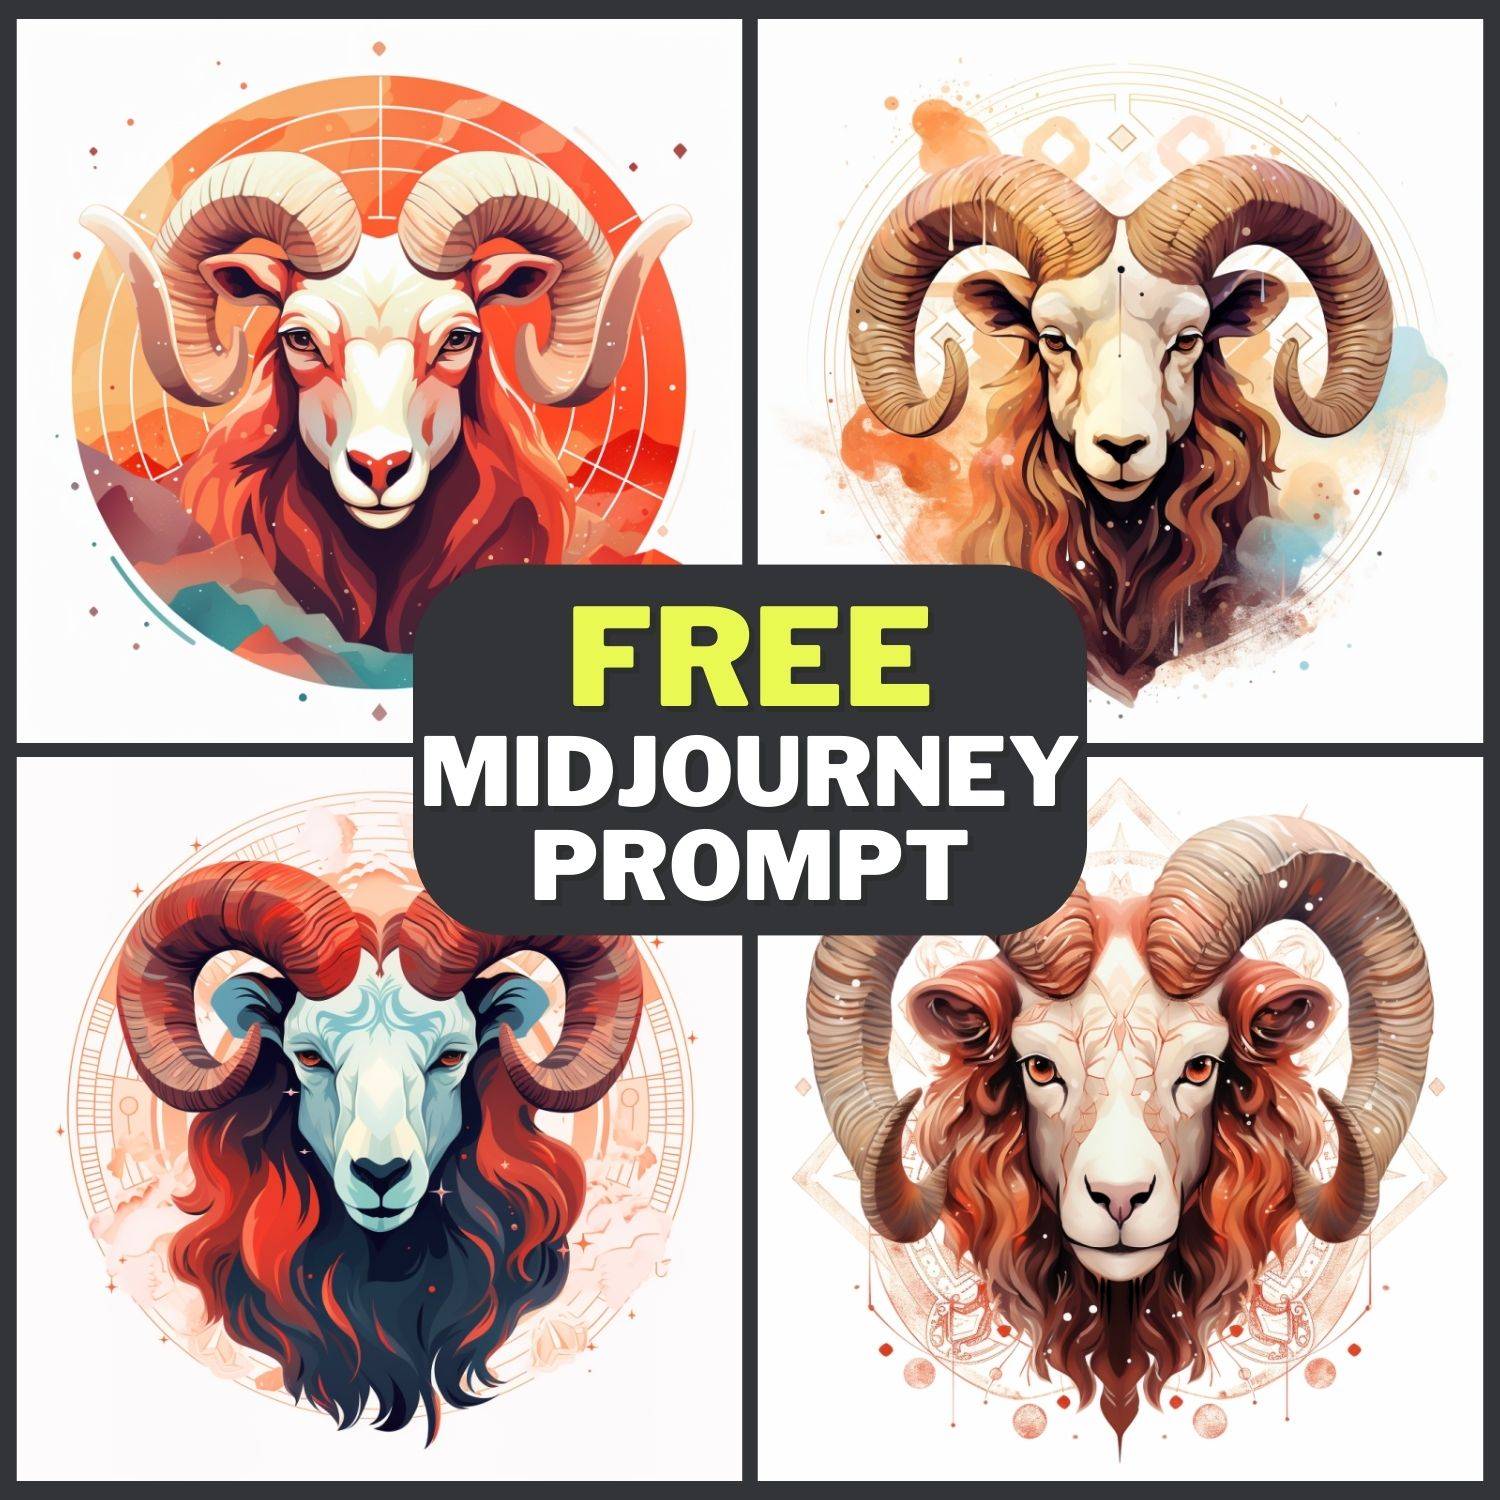 Aries Zodiac Sign Horoscope Illustration Free Midjourney Prompt 1